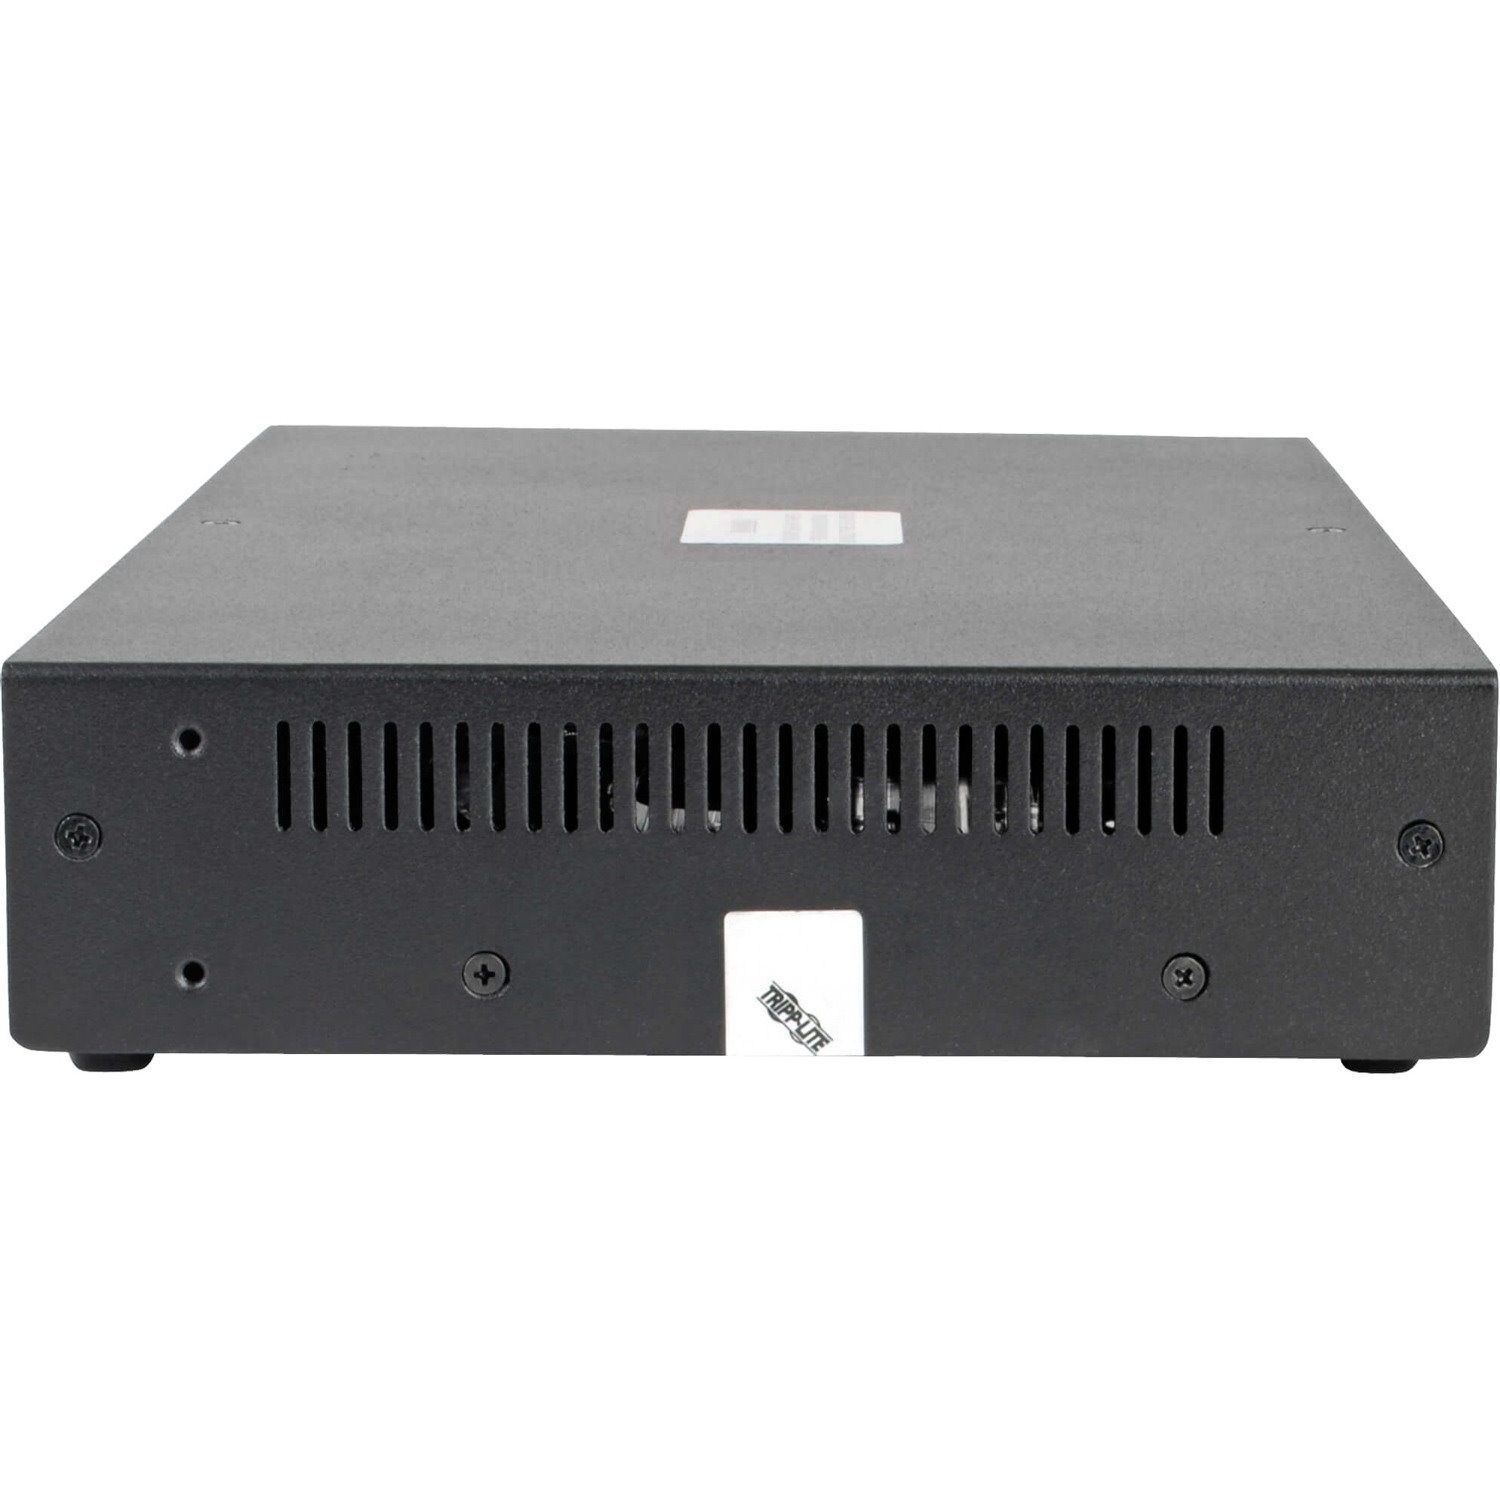 Tripp Lite by Eaton Secure KVM Switch, 4-Port, DVI to DVI, NIAP PP3.0 Certified, Audio, Single Monitor, TAA